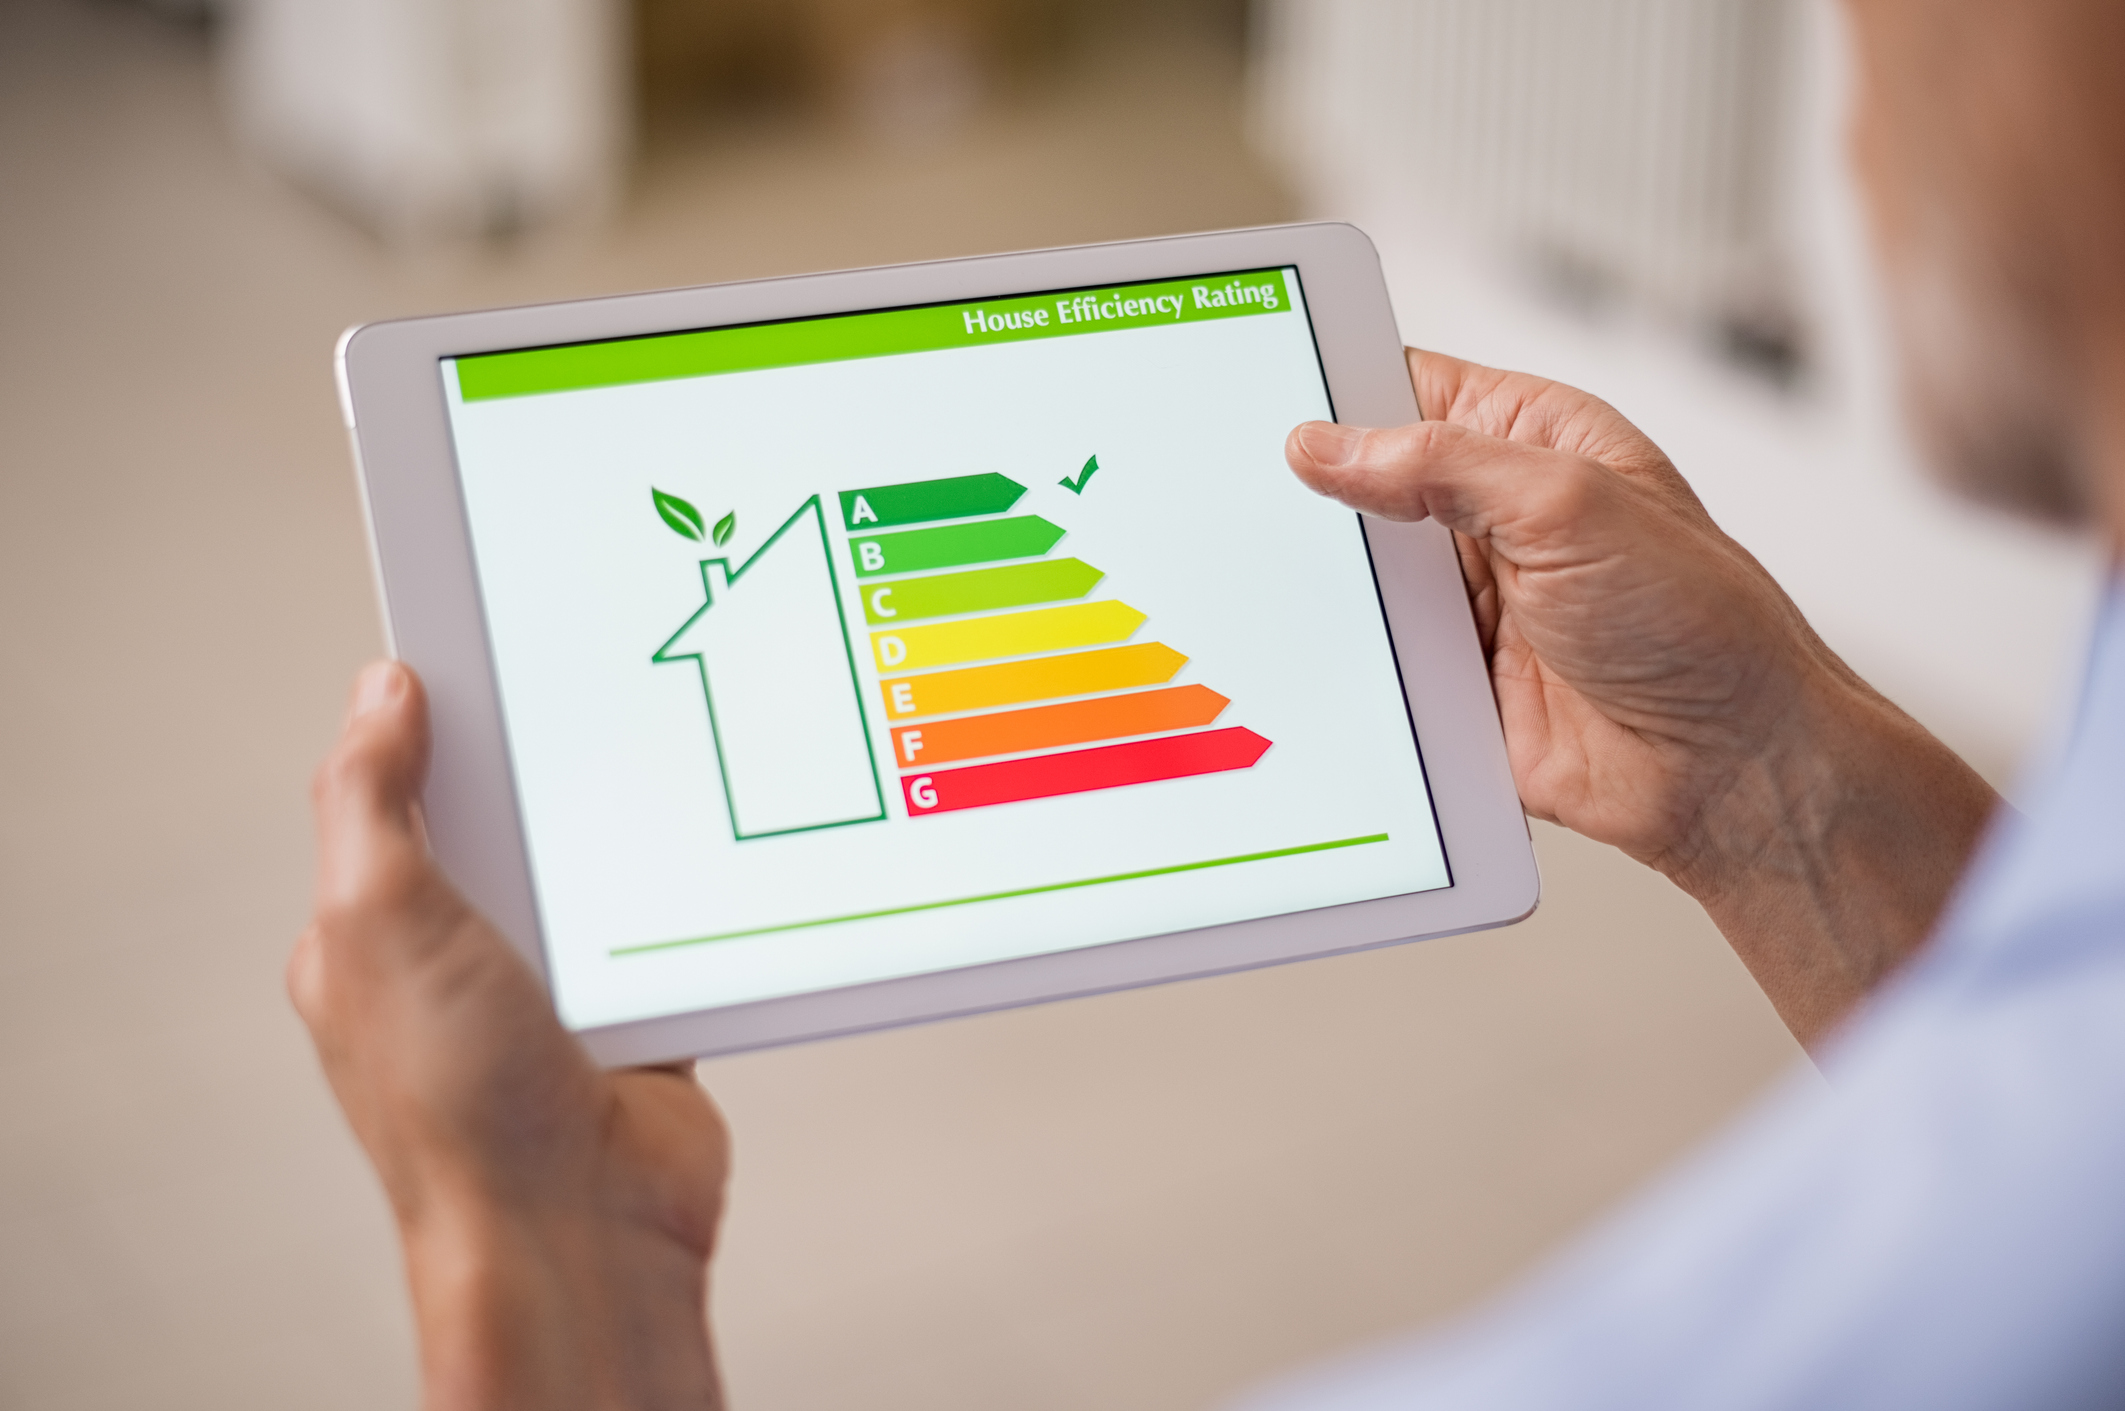 Energy efficiency house rating